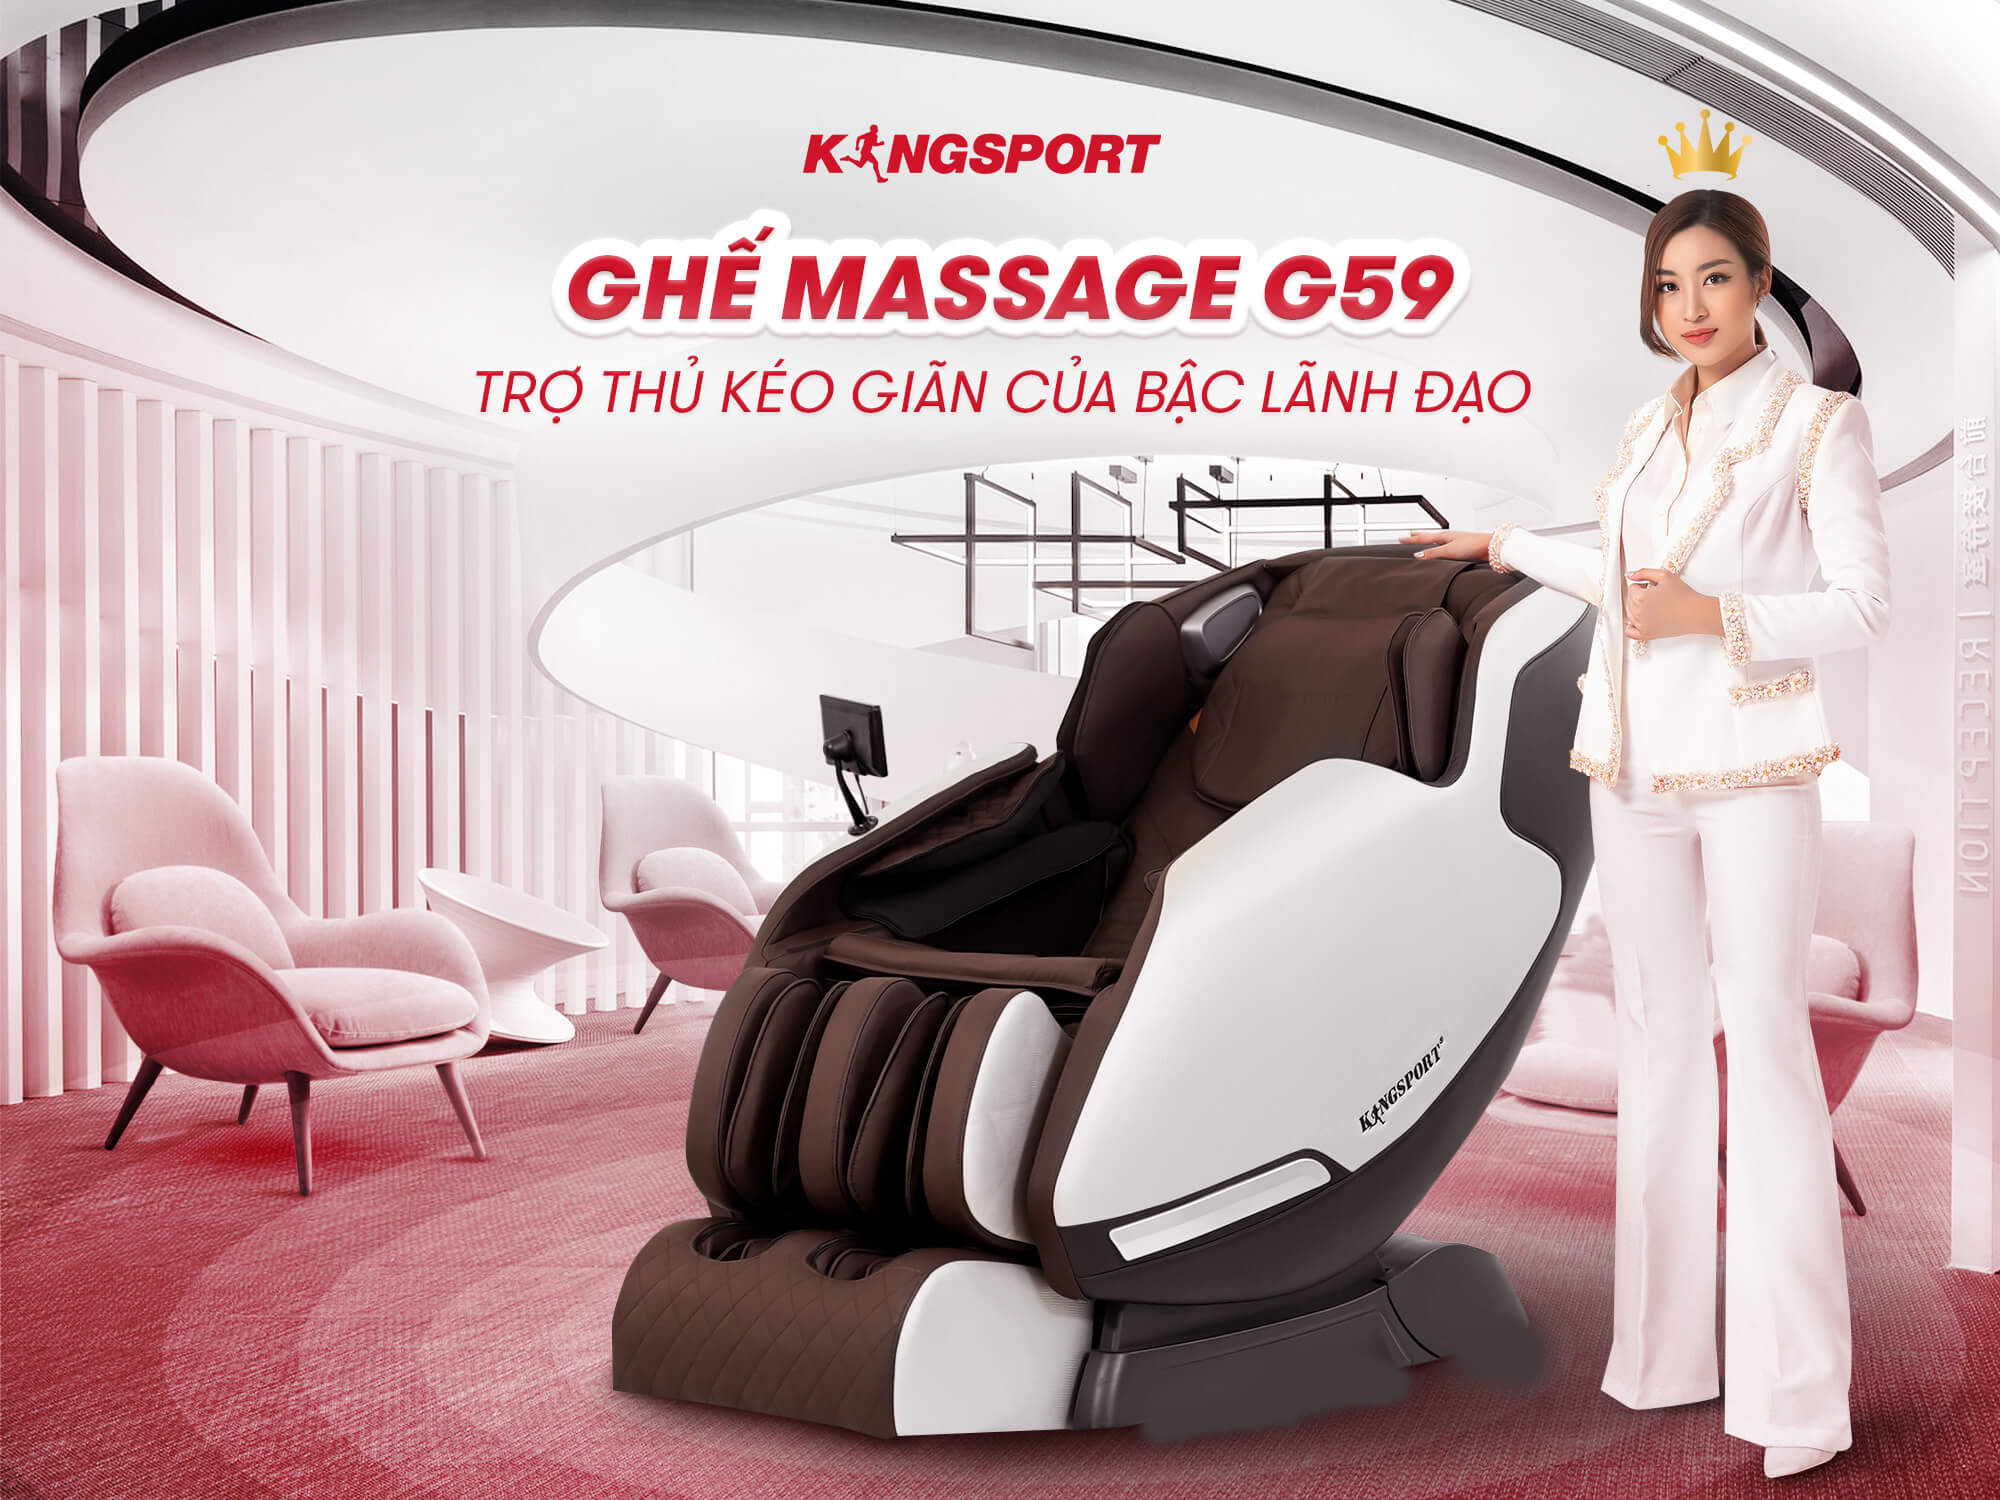 Ghế massage Kingsport G59 New